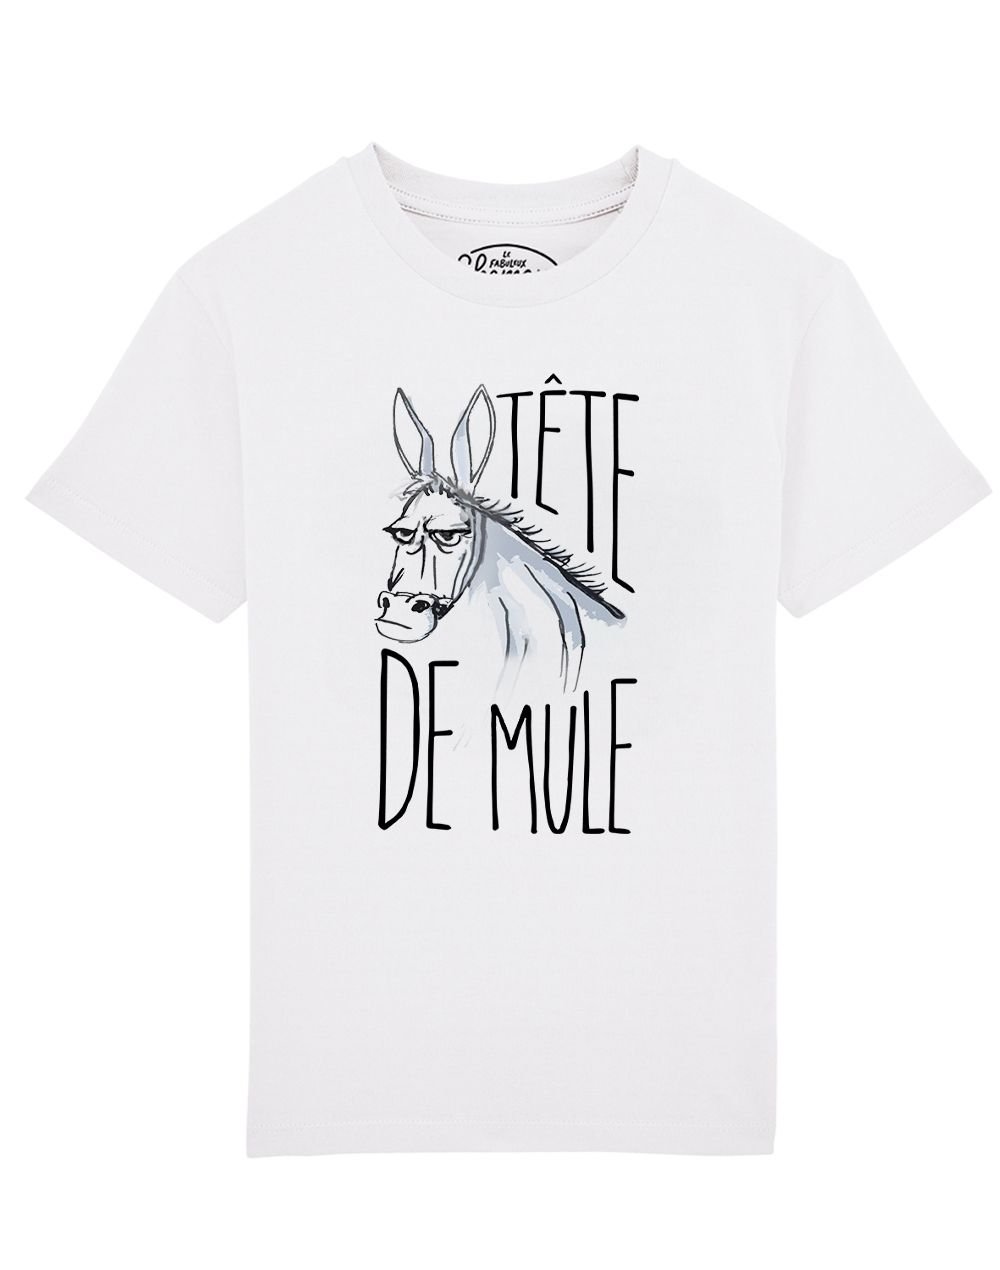 Tee shirt Tête de Mule